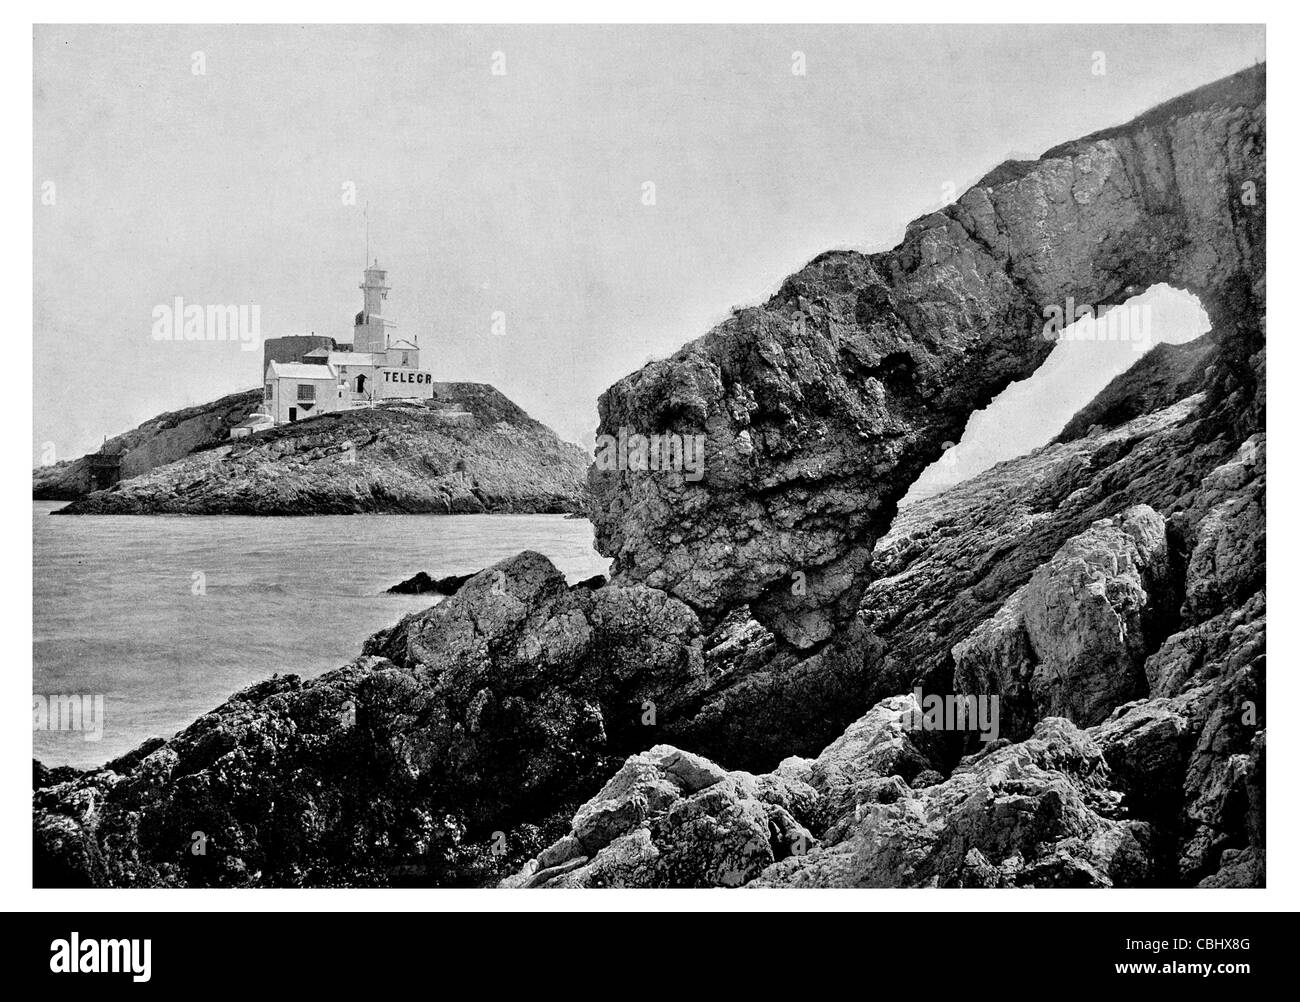 mumbles-lighthouse-island-head-swansea-bay-lifeboat-station-landmark-CBHX8G.jpg